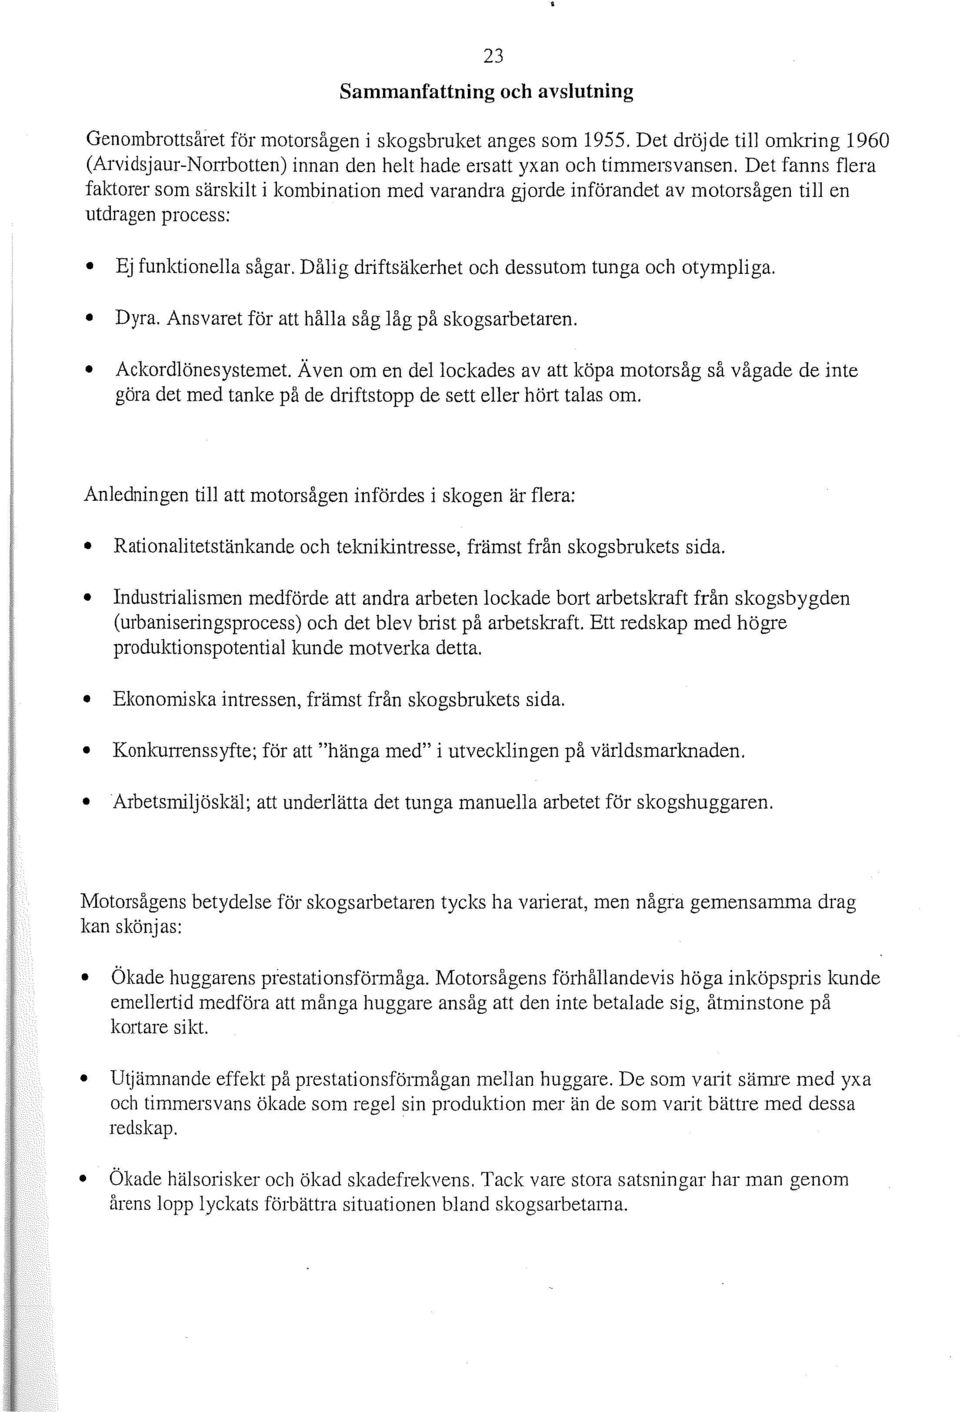 ett teisni~lf~l!tyef]{1ingssteg.,.,,:'. qetydelseför skogs,. - PDF Free  Download